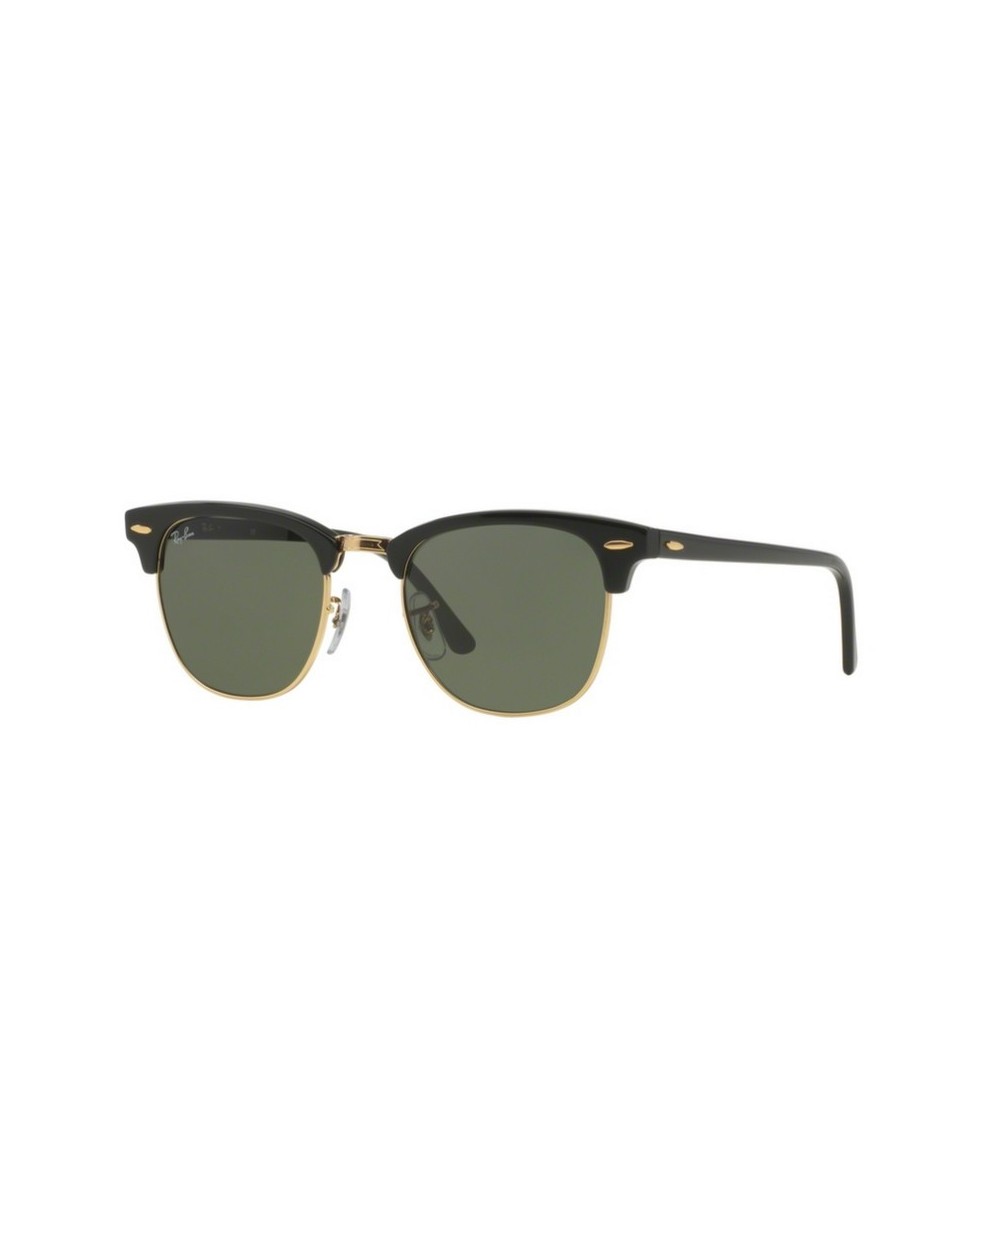 Sunglasses Ray Ban RB3016 original warranty Eng | OPTICAL PADULA